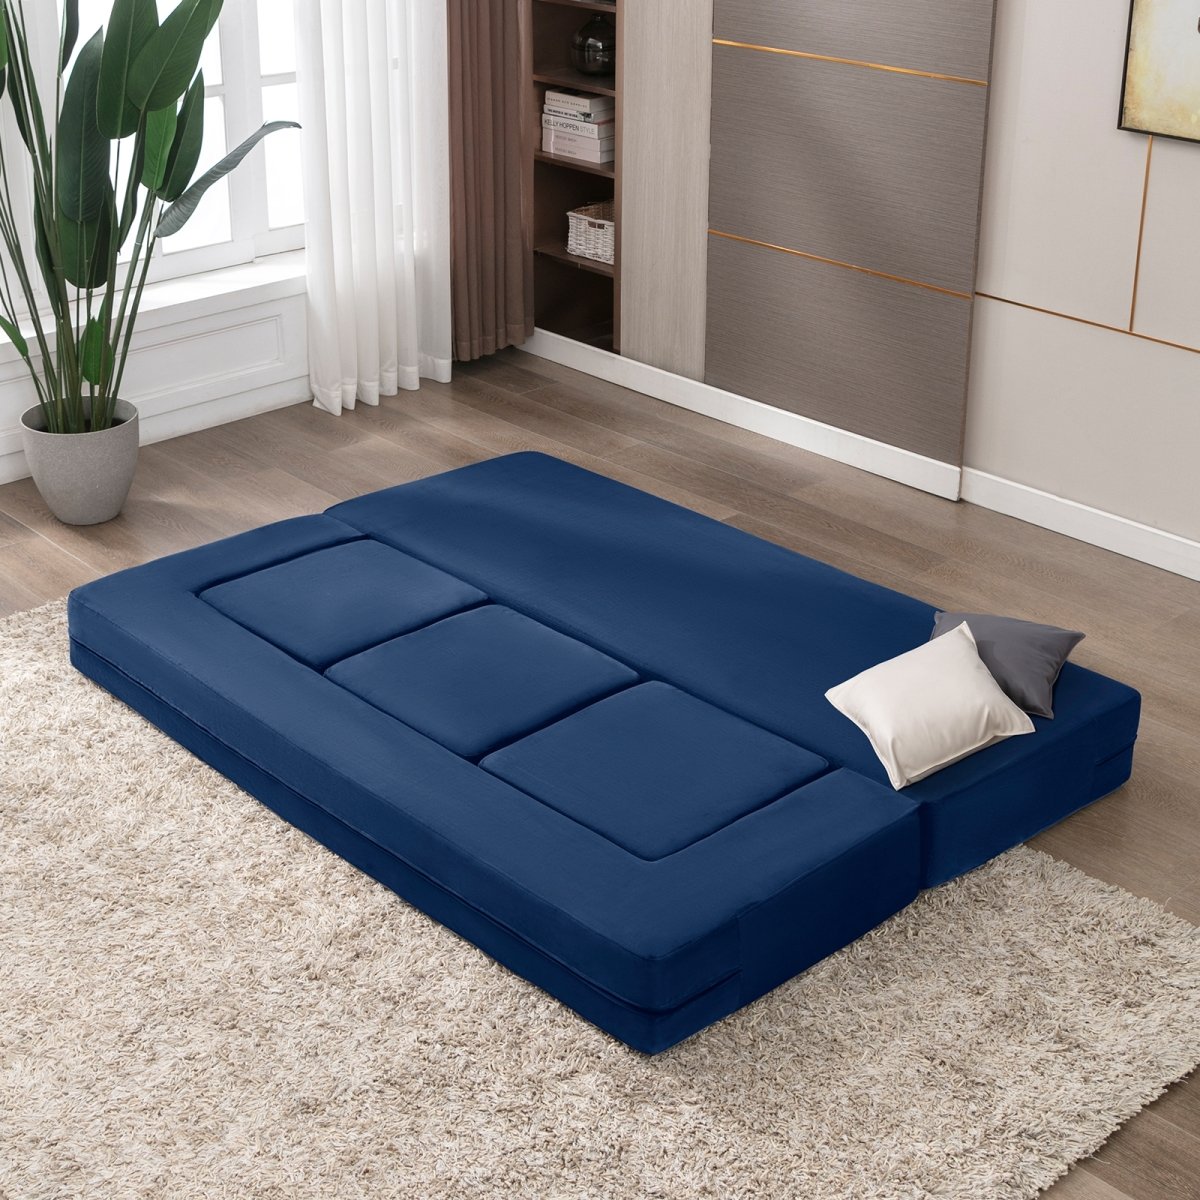 Couch Sofa Bed | Folding Convertible Sofa With Three Futon Ottomans - Mjkonesofa bed